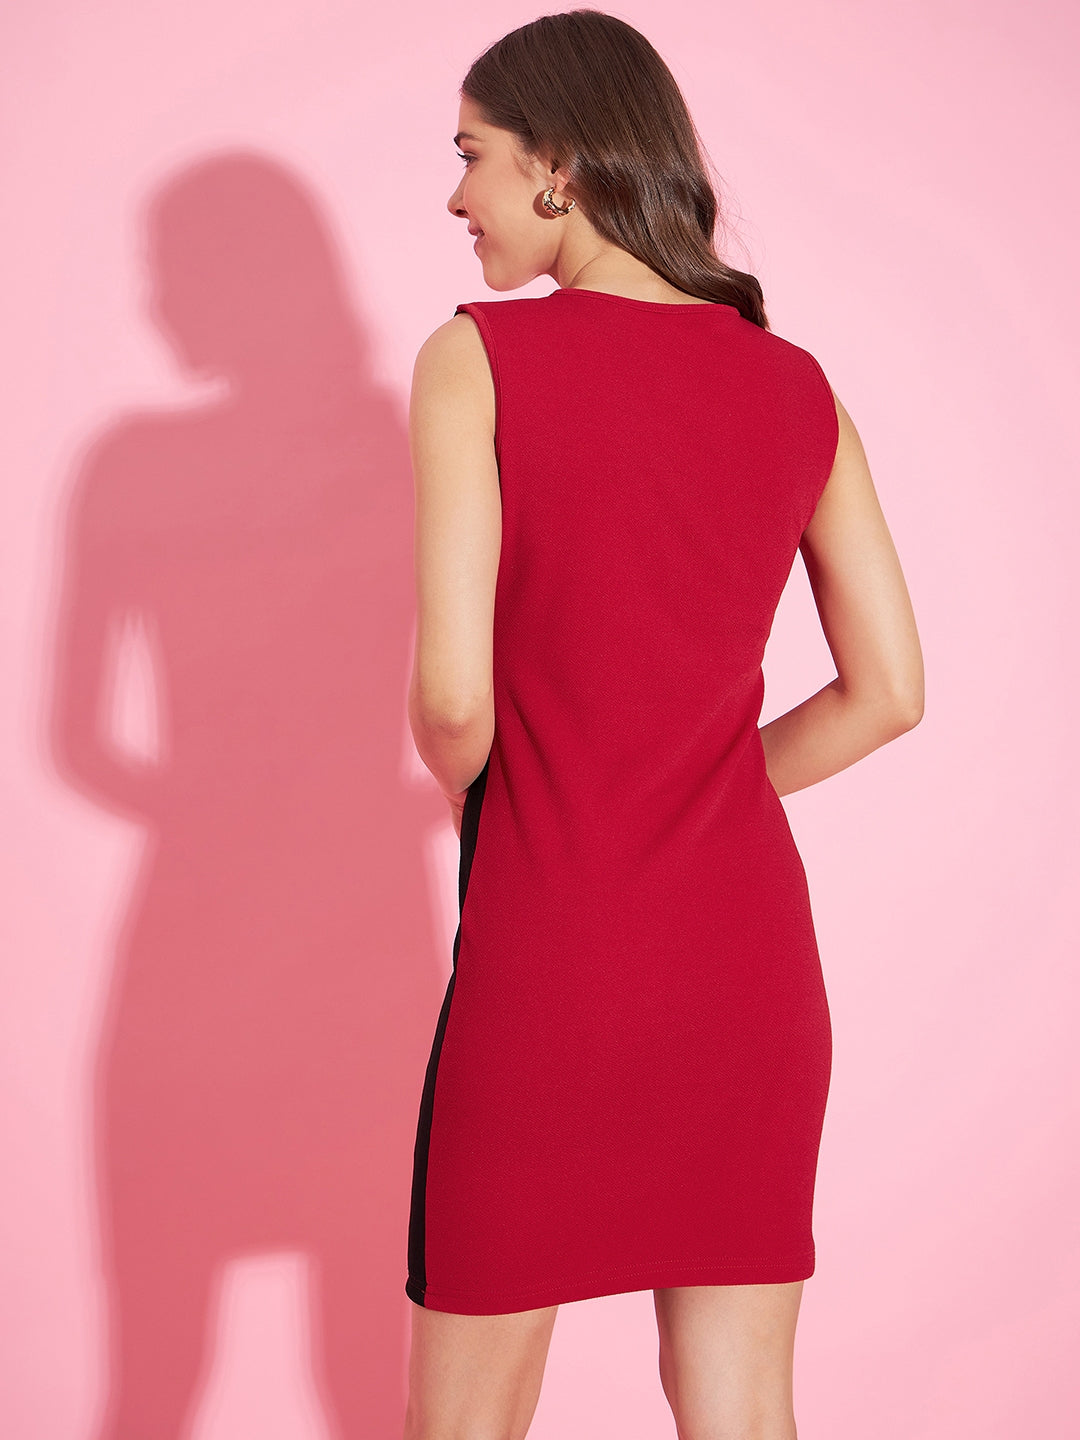 Women's Red & Black Color Blocking Bodycon Dress - StyleStone